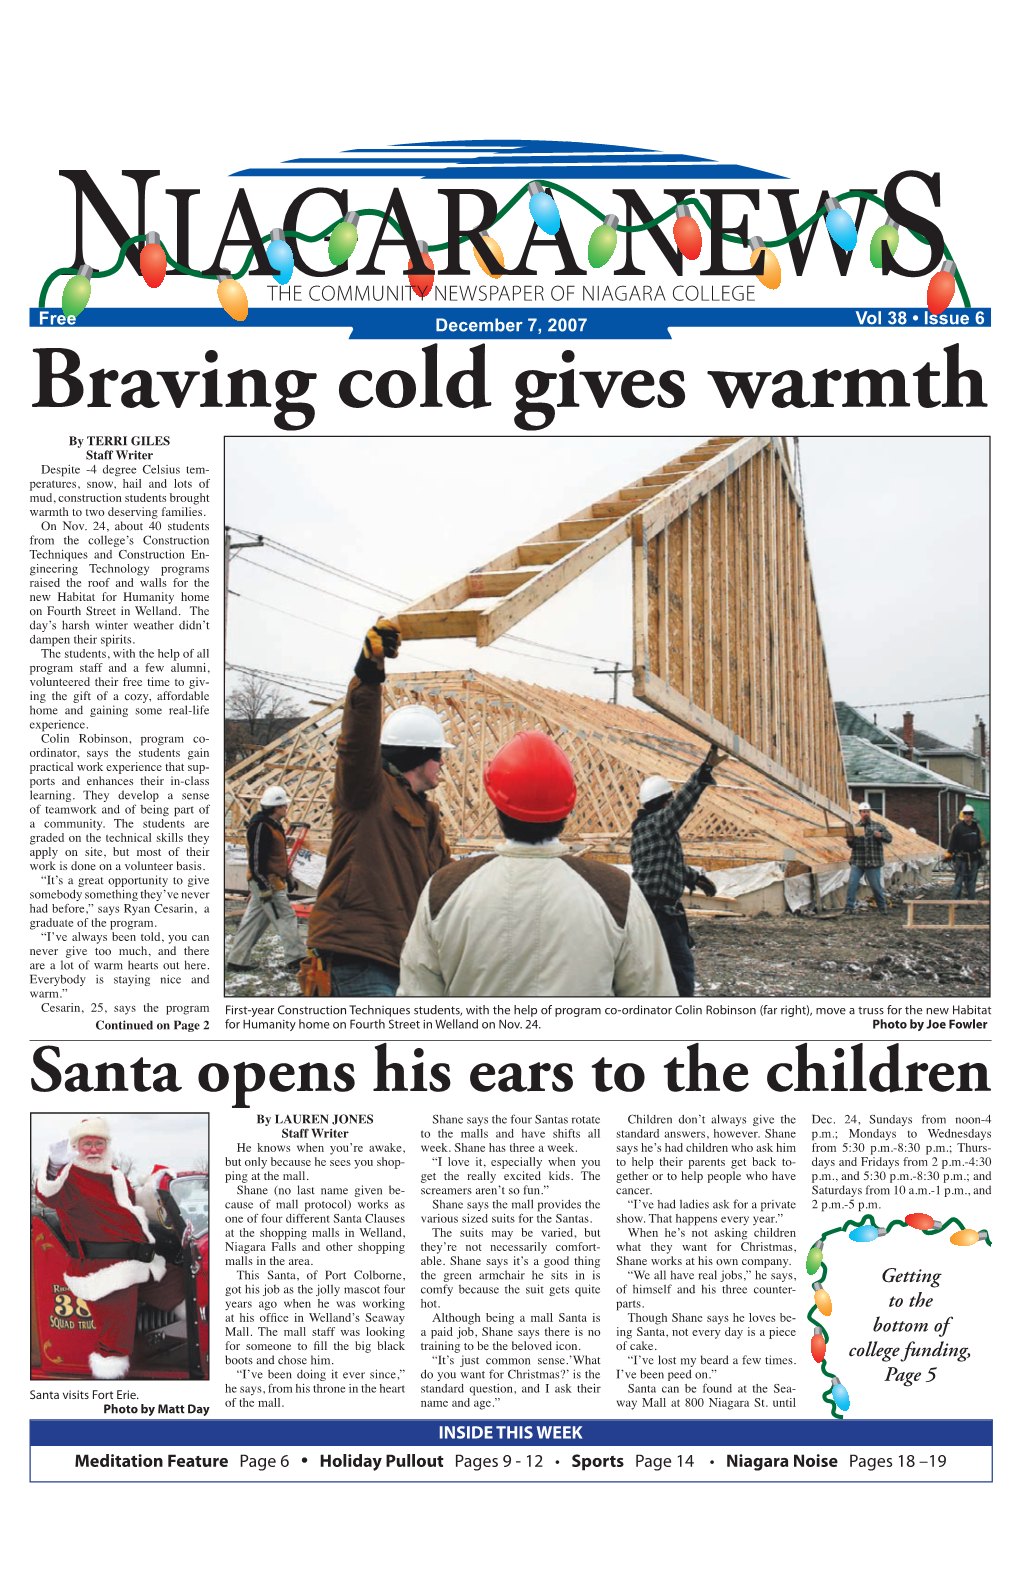 Niagara Noise Pages 18 –19 2 NIAGARA NEWS Dec